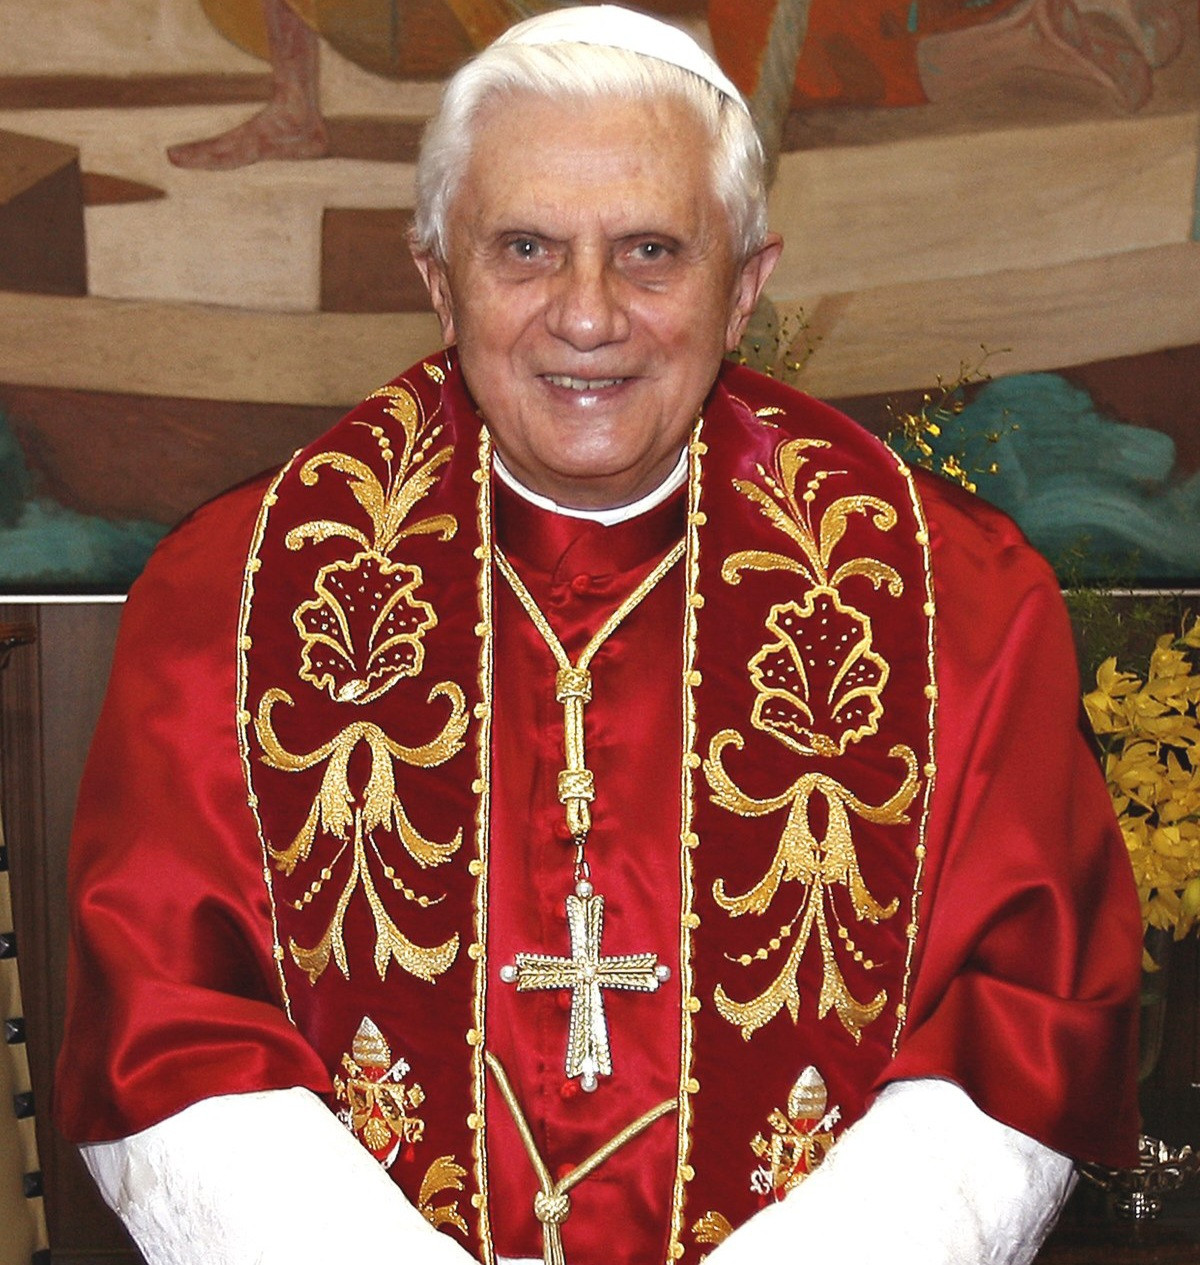 FORMER POPE BENEDICT XVI DIES AT 95